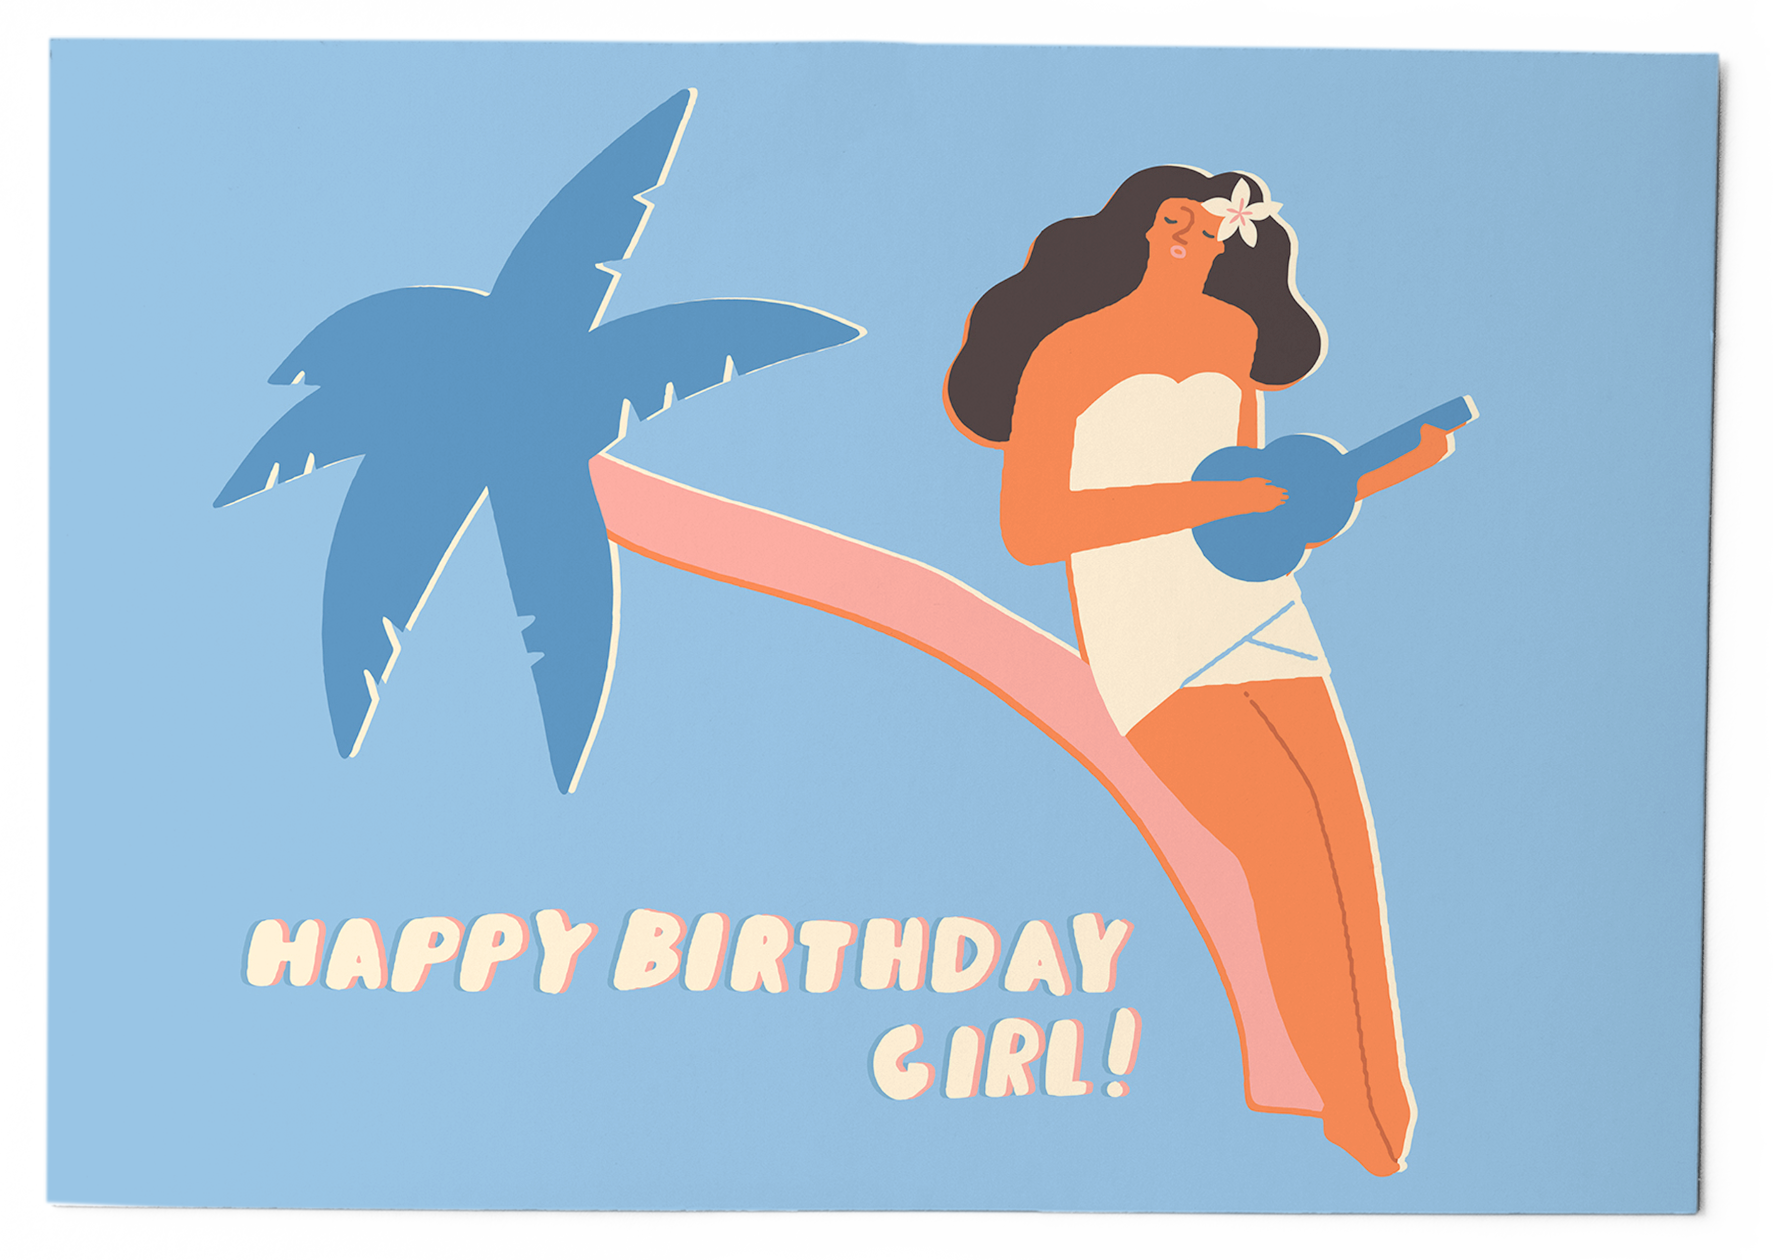 Happy birthday - Card